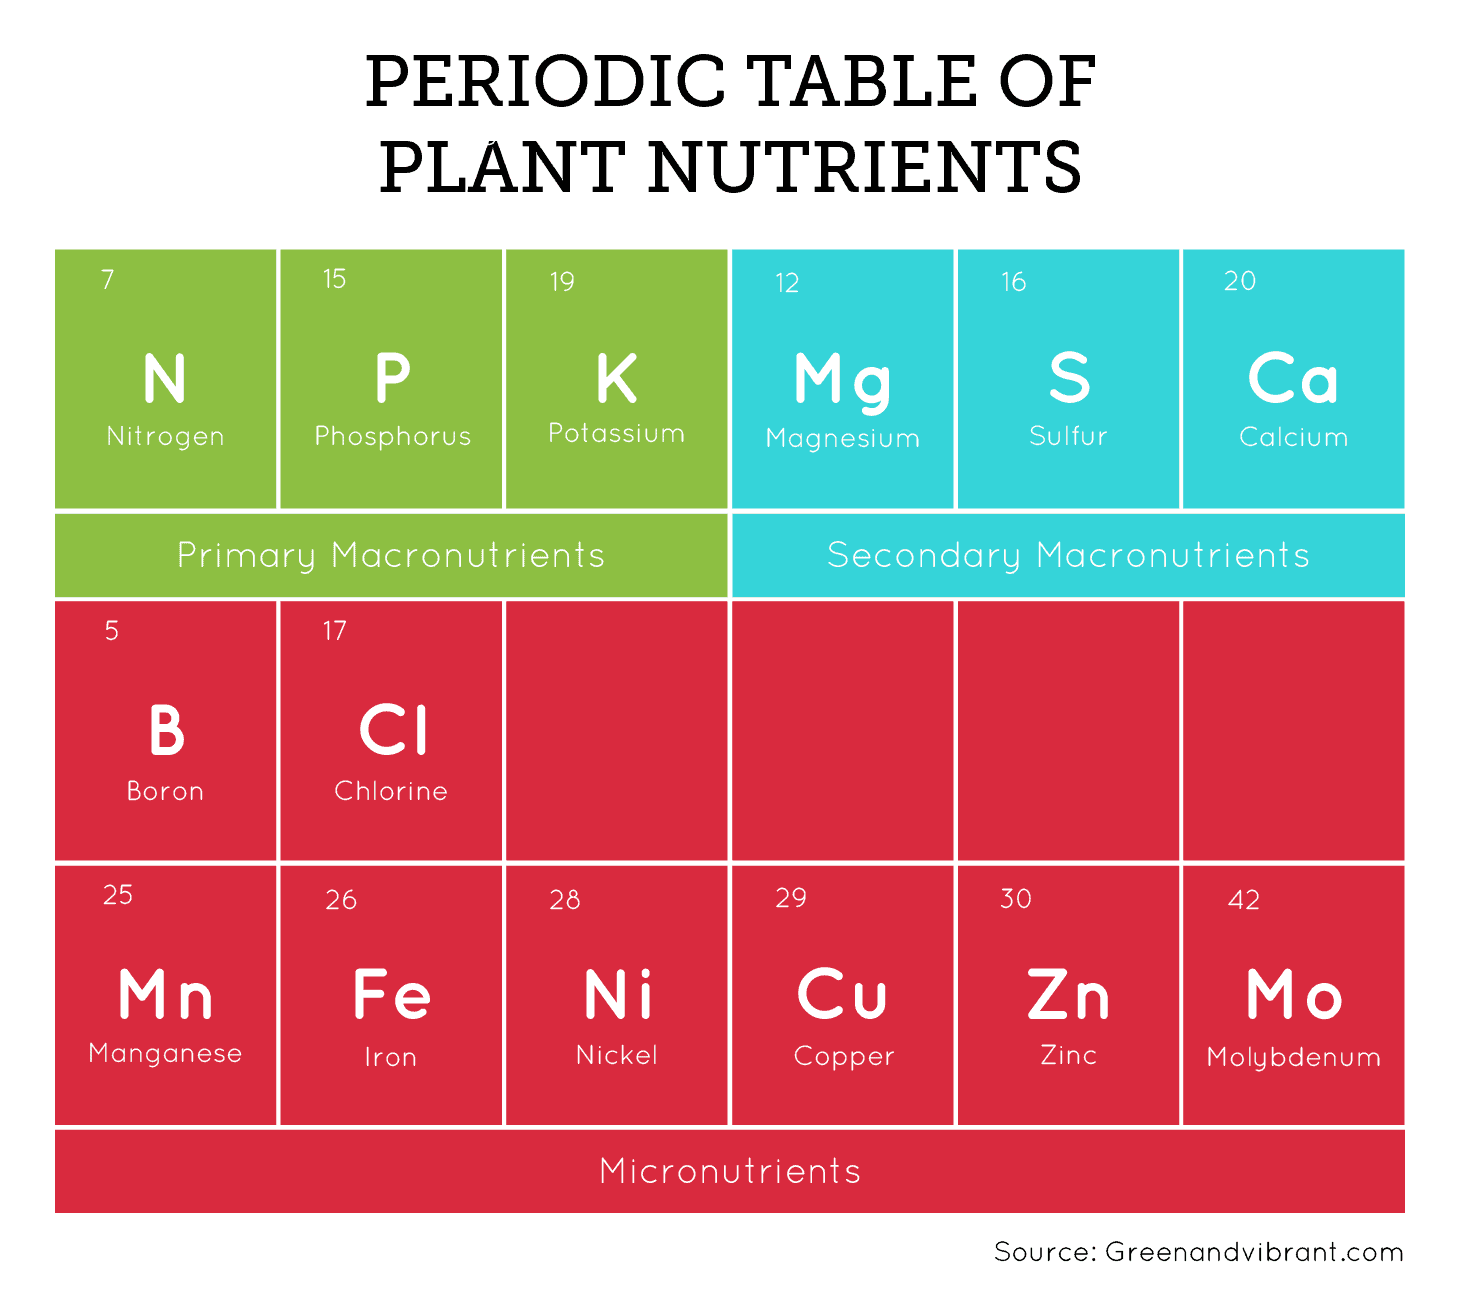 Plant Nutrients - Primary Macronutrients, Secondary Macronutrients, and Micronutrients